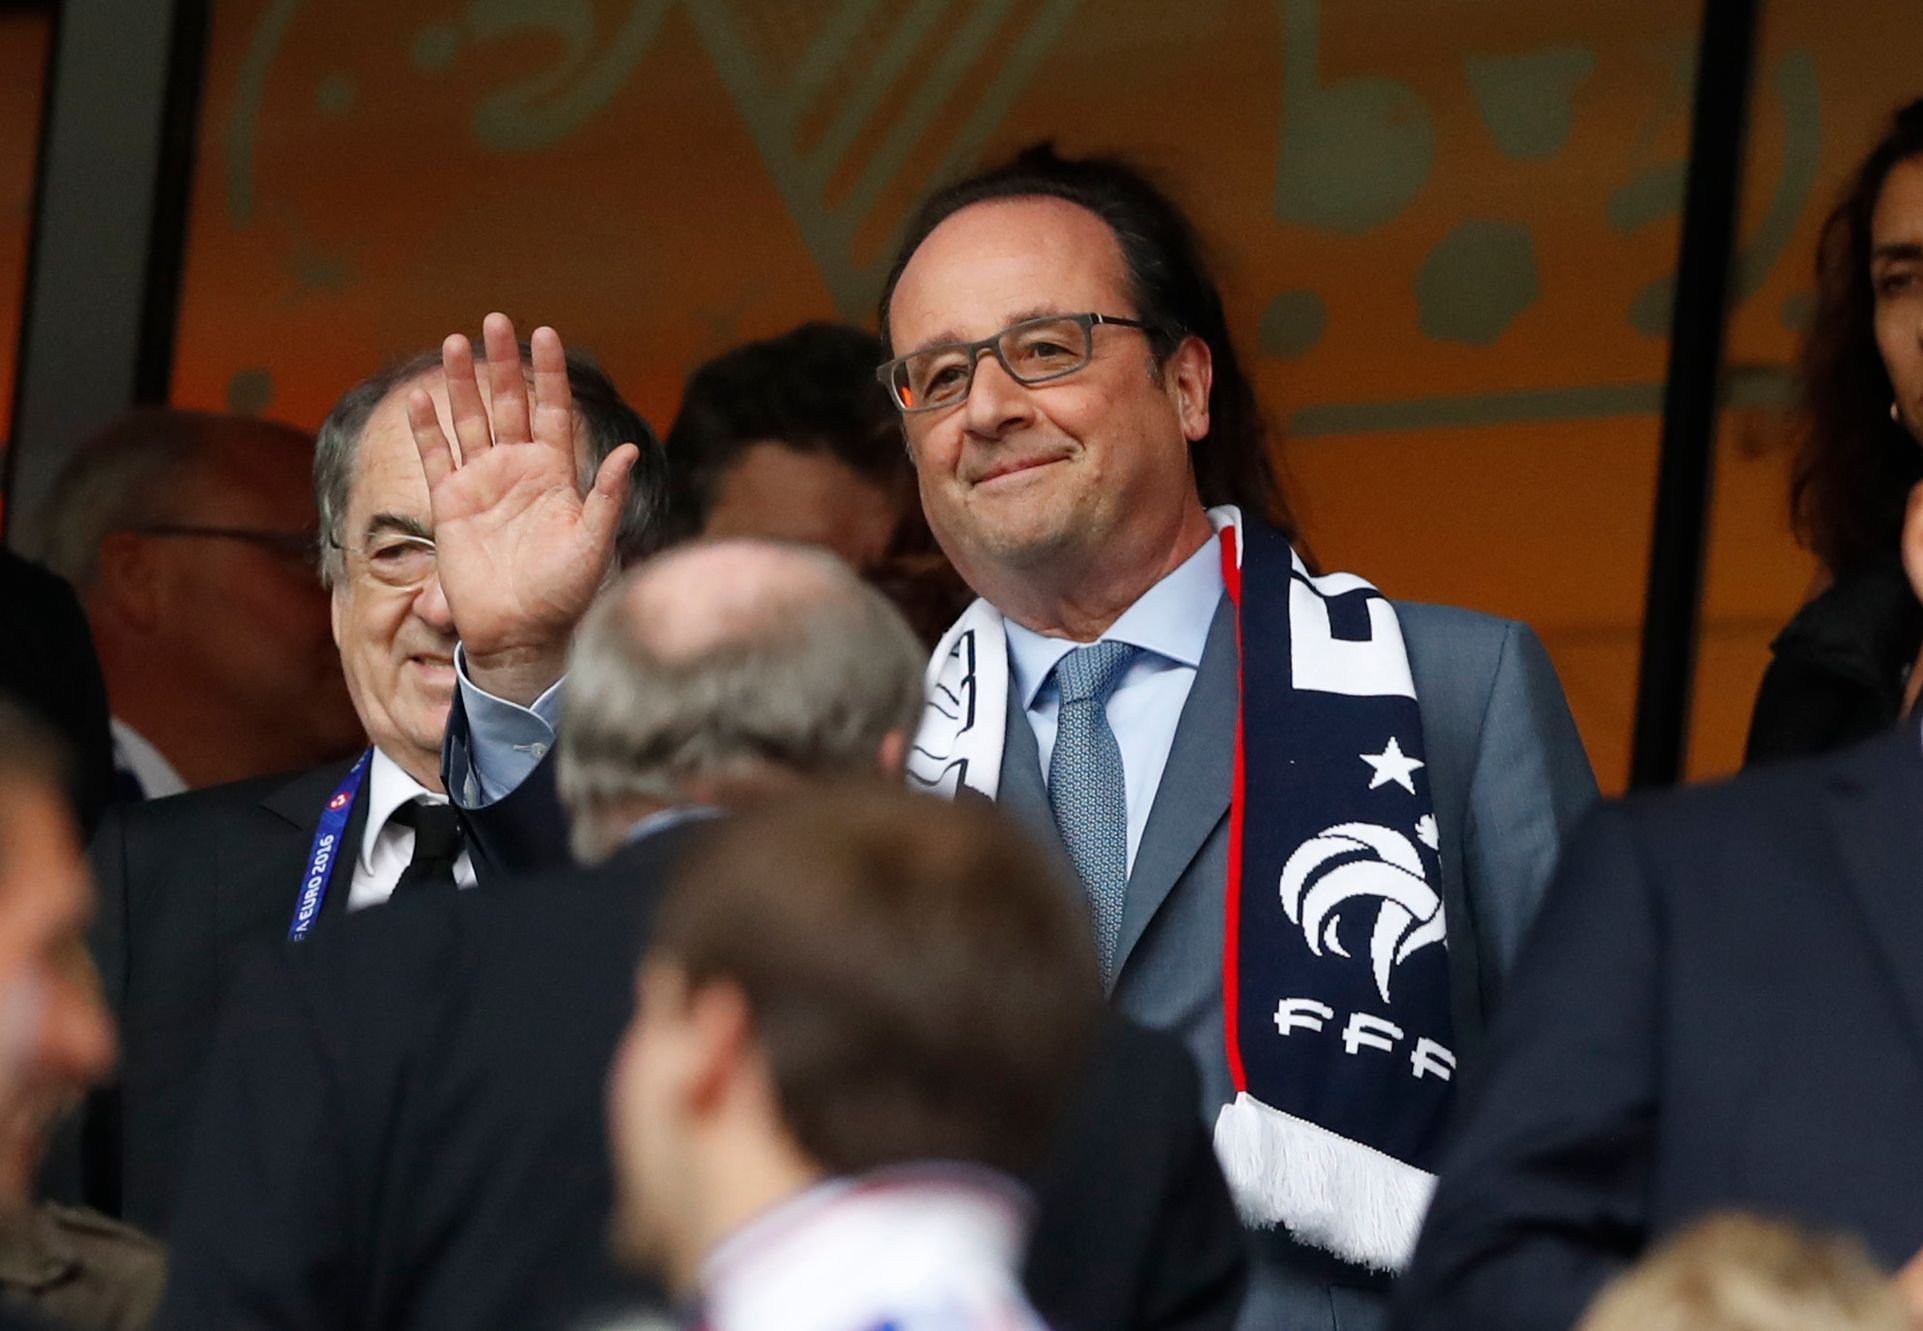 Euro 2016, Švýcarsko-Francie: francouzský prezident Francois Hollande